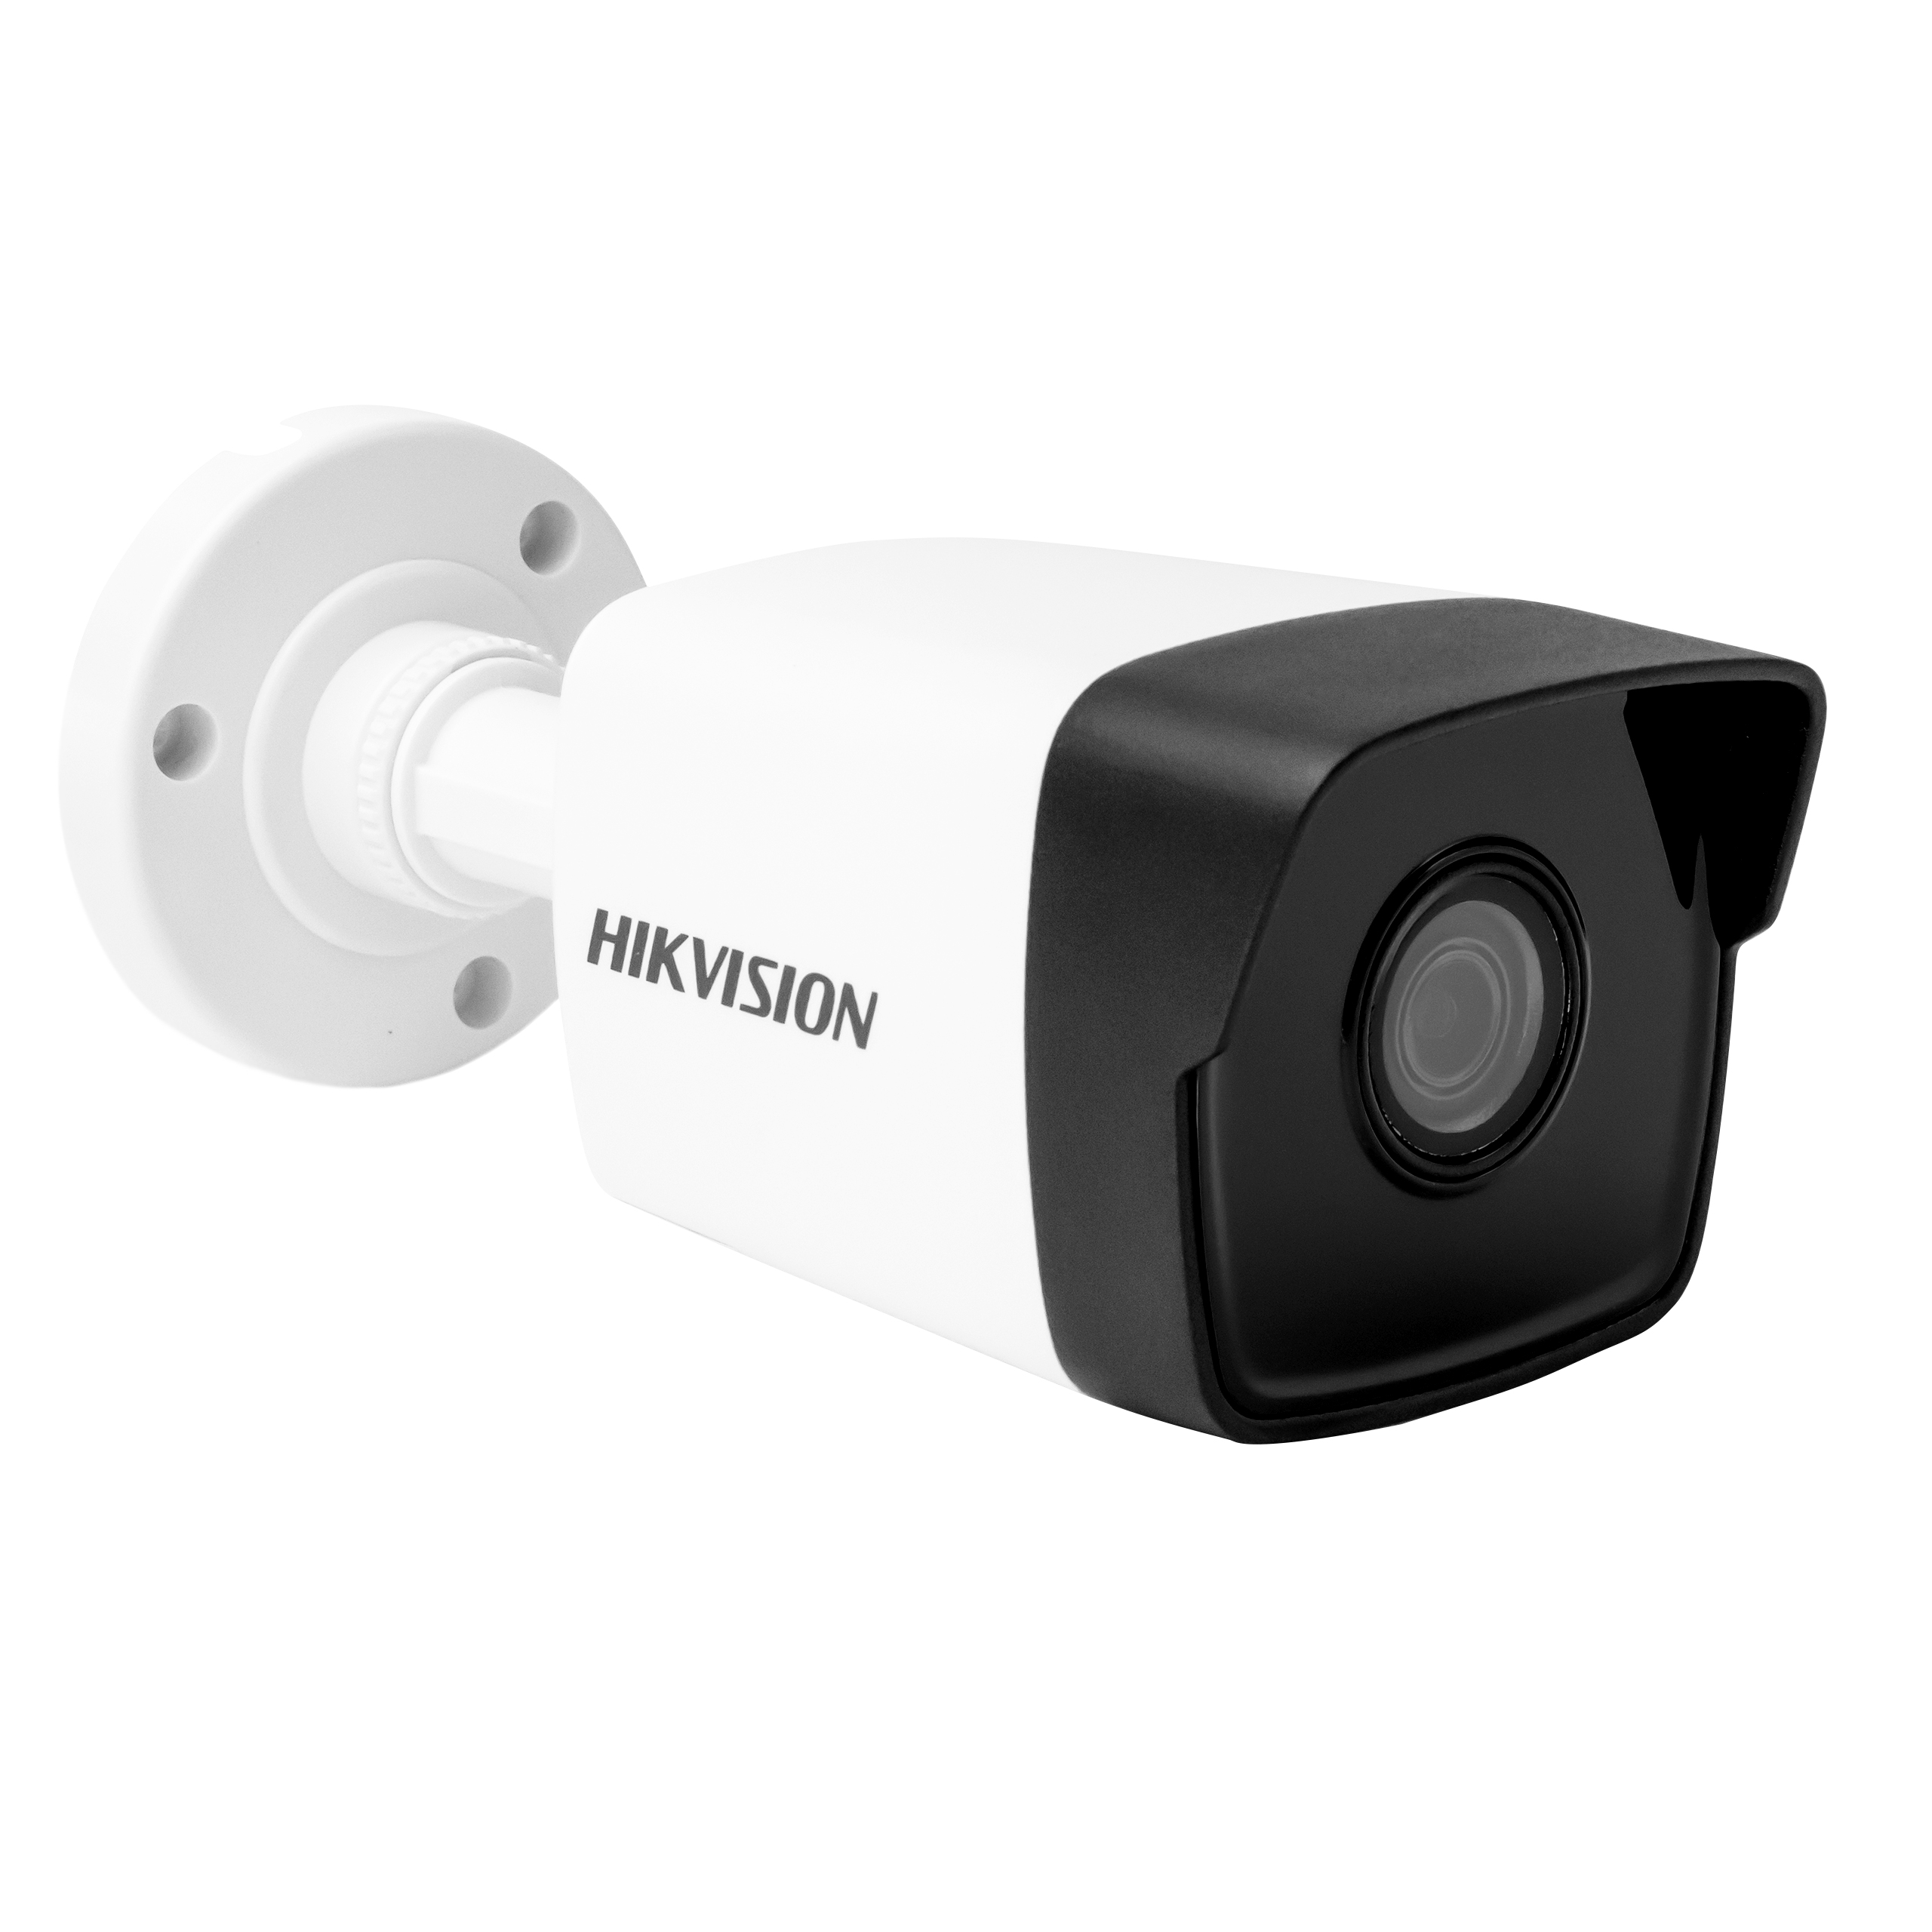 HIKVISION DS-2CD1043G0-I Turbo HD Camera